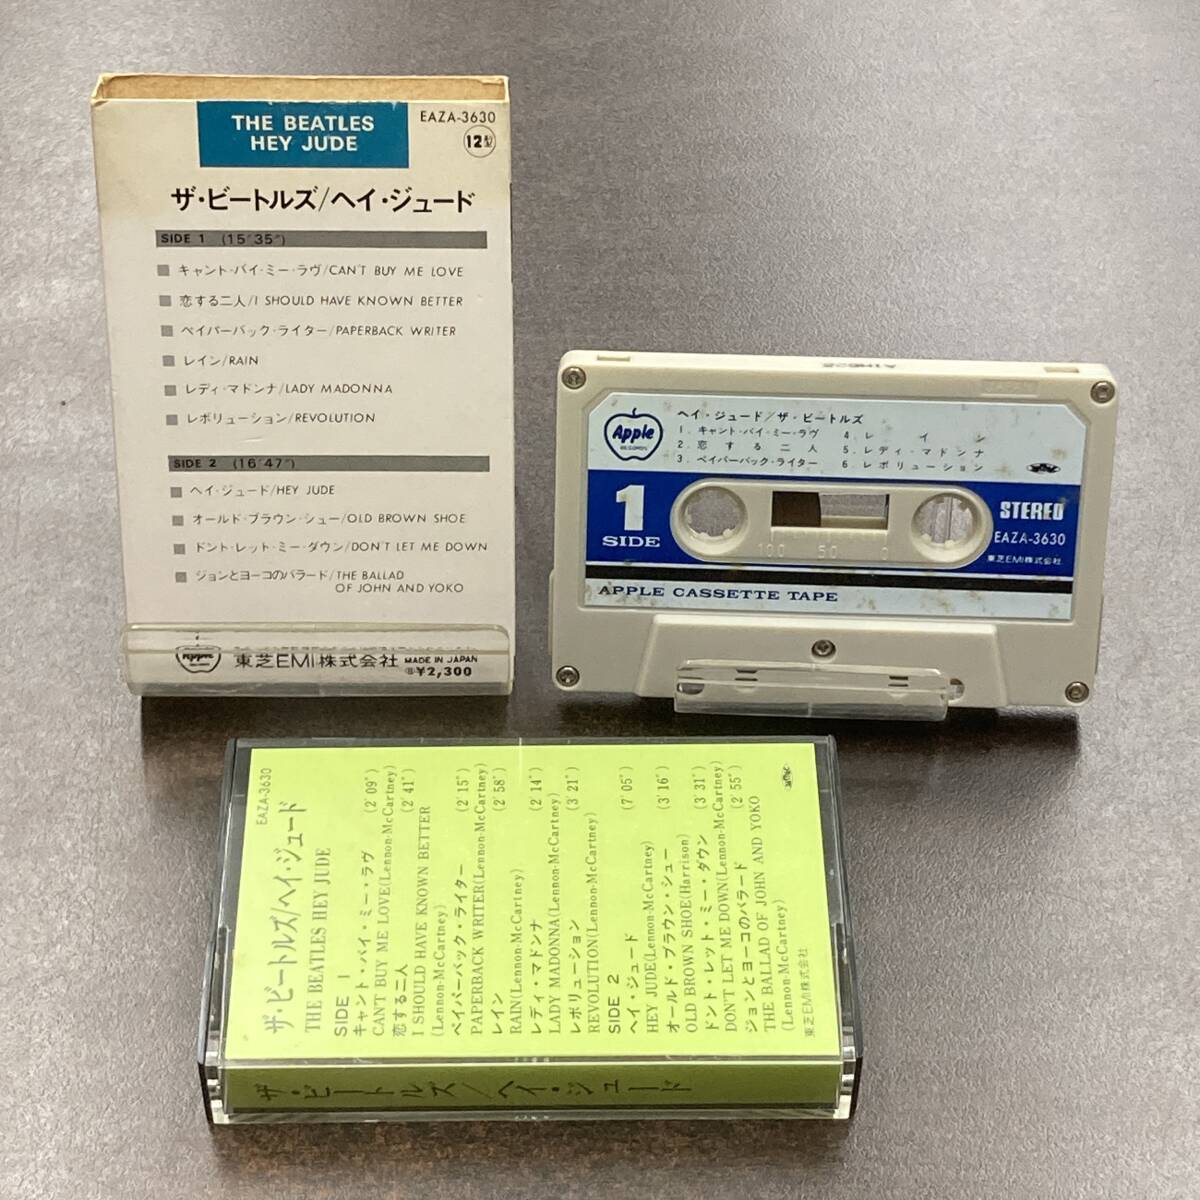 1130M The * Beatles partition *ju-doHEY JUDE cassette tape / THE BEATLES Cassette Tape